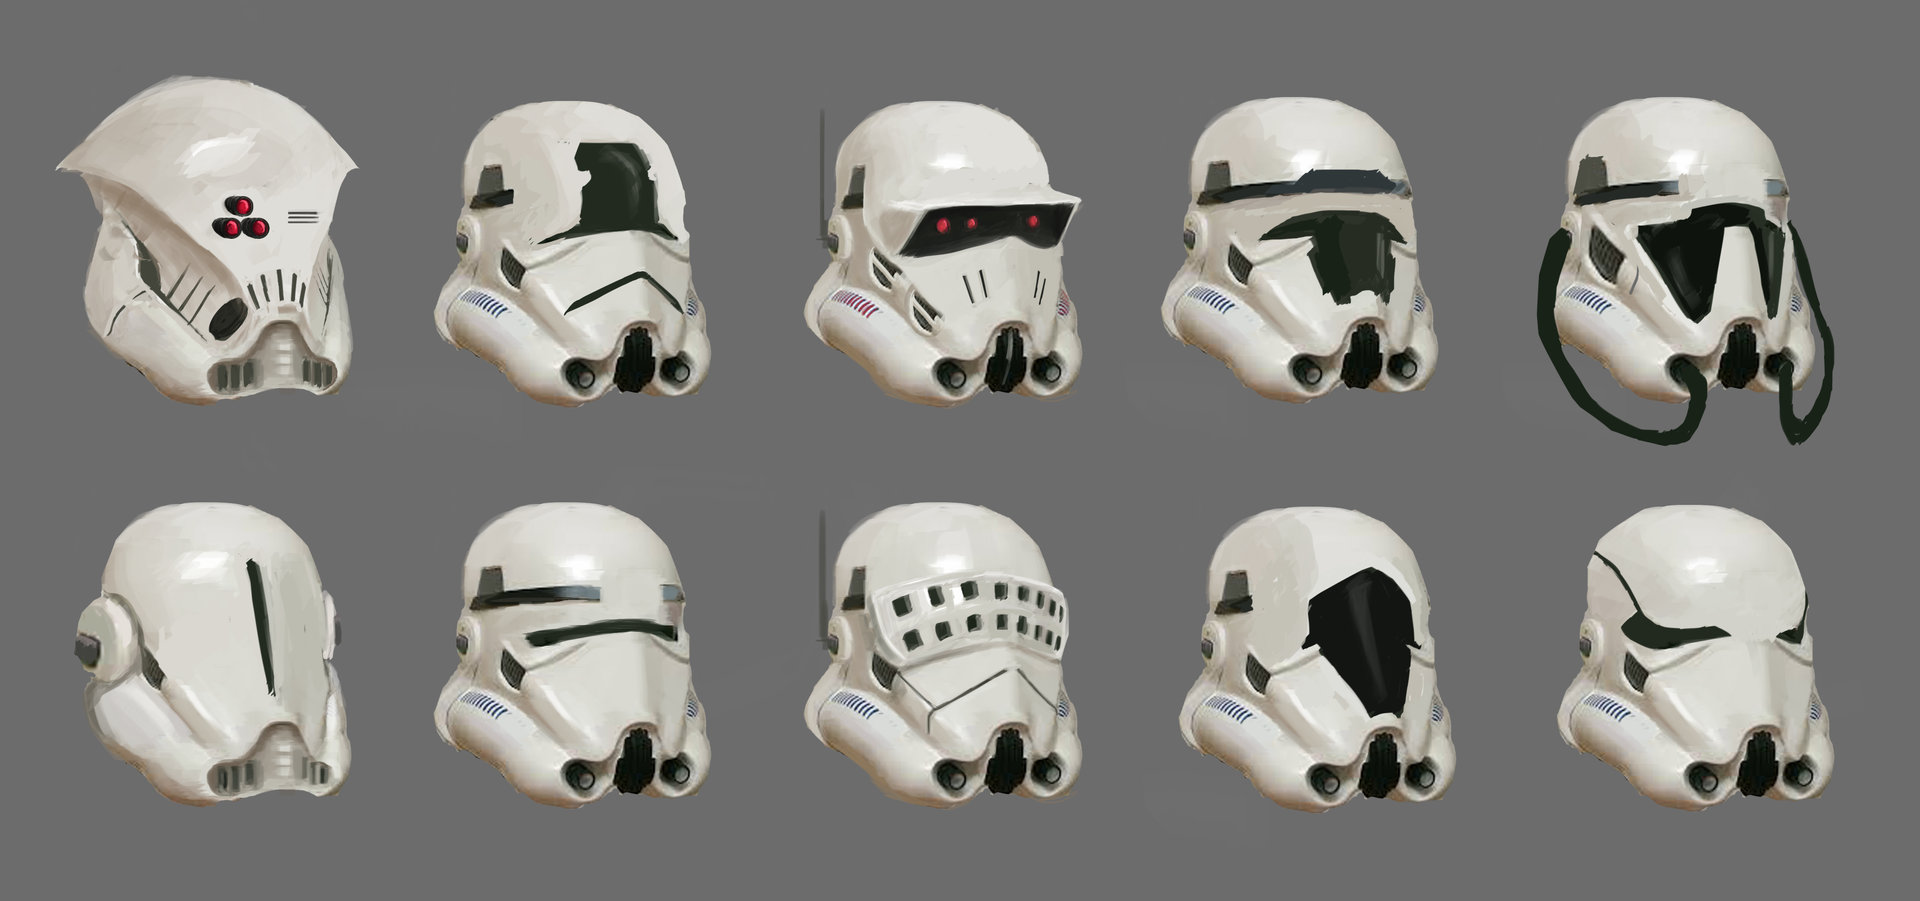 clone trooper armor designs